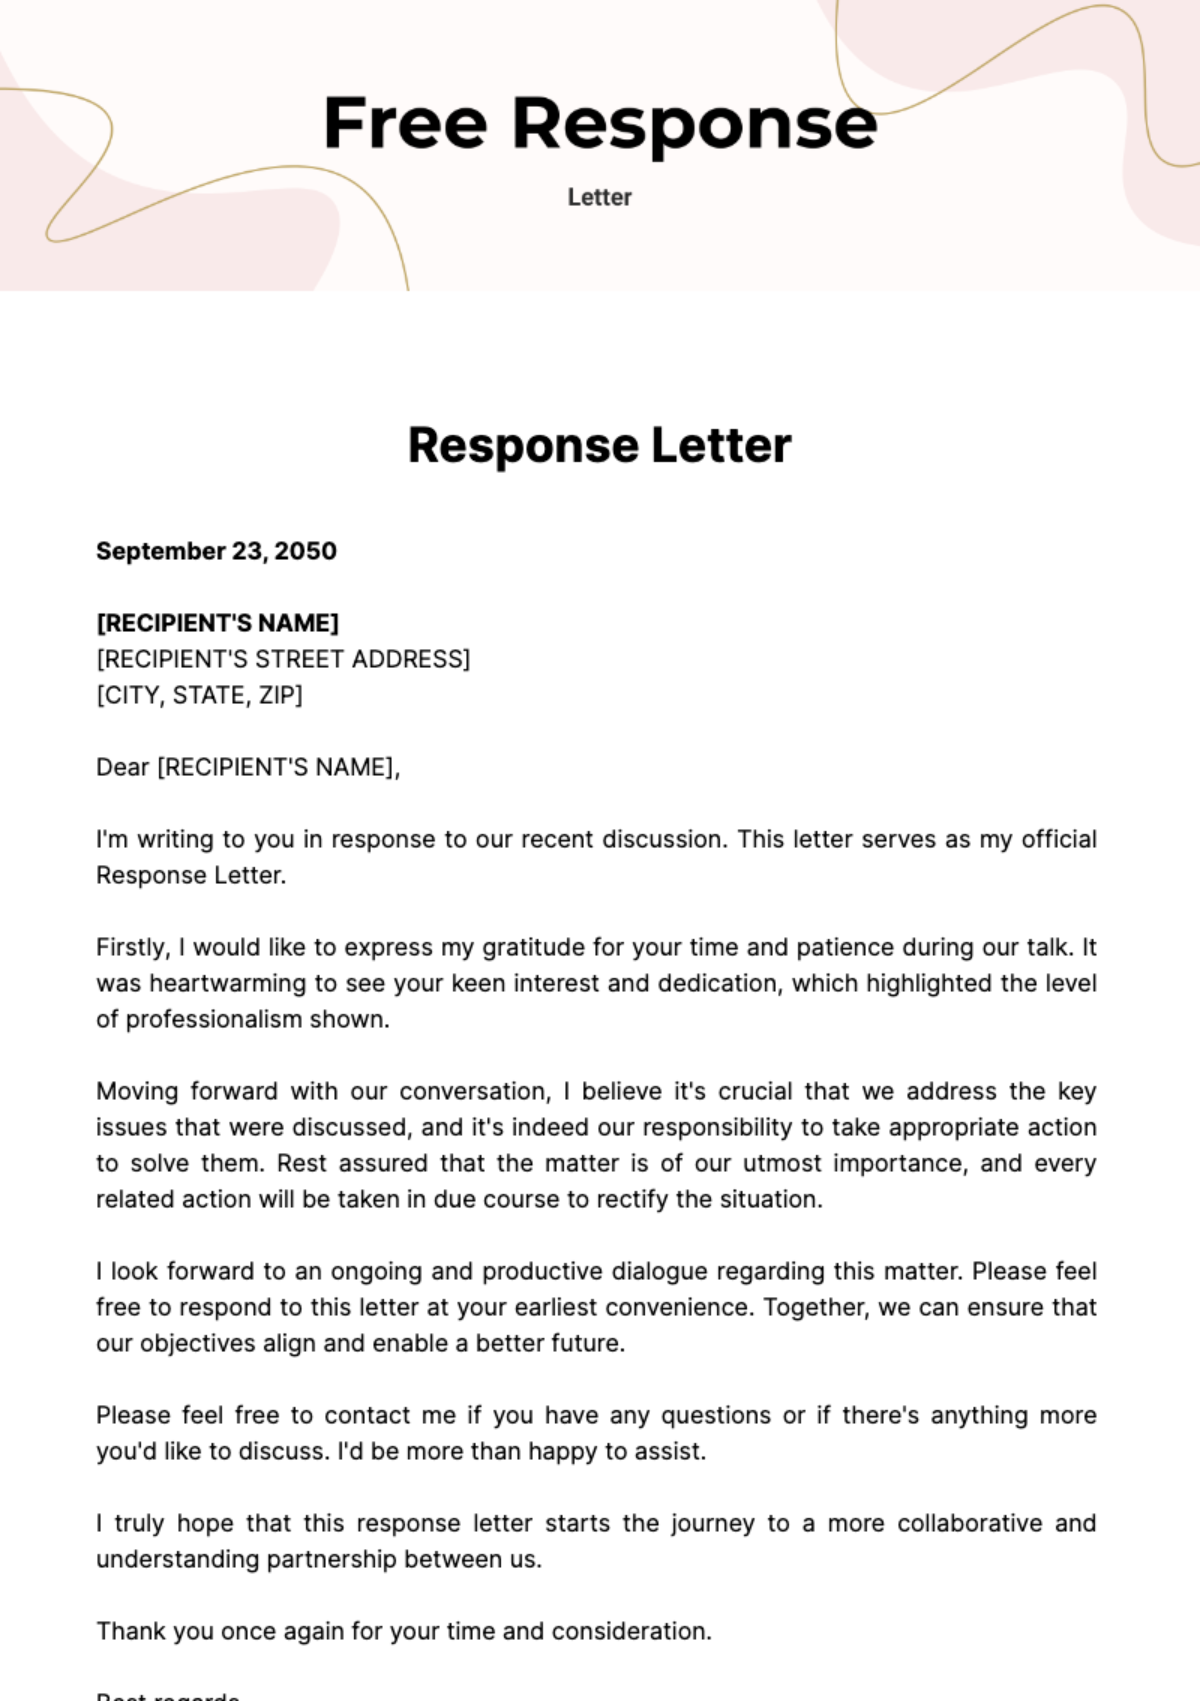 Response Letter Template